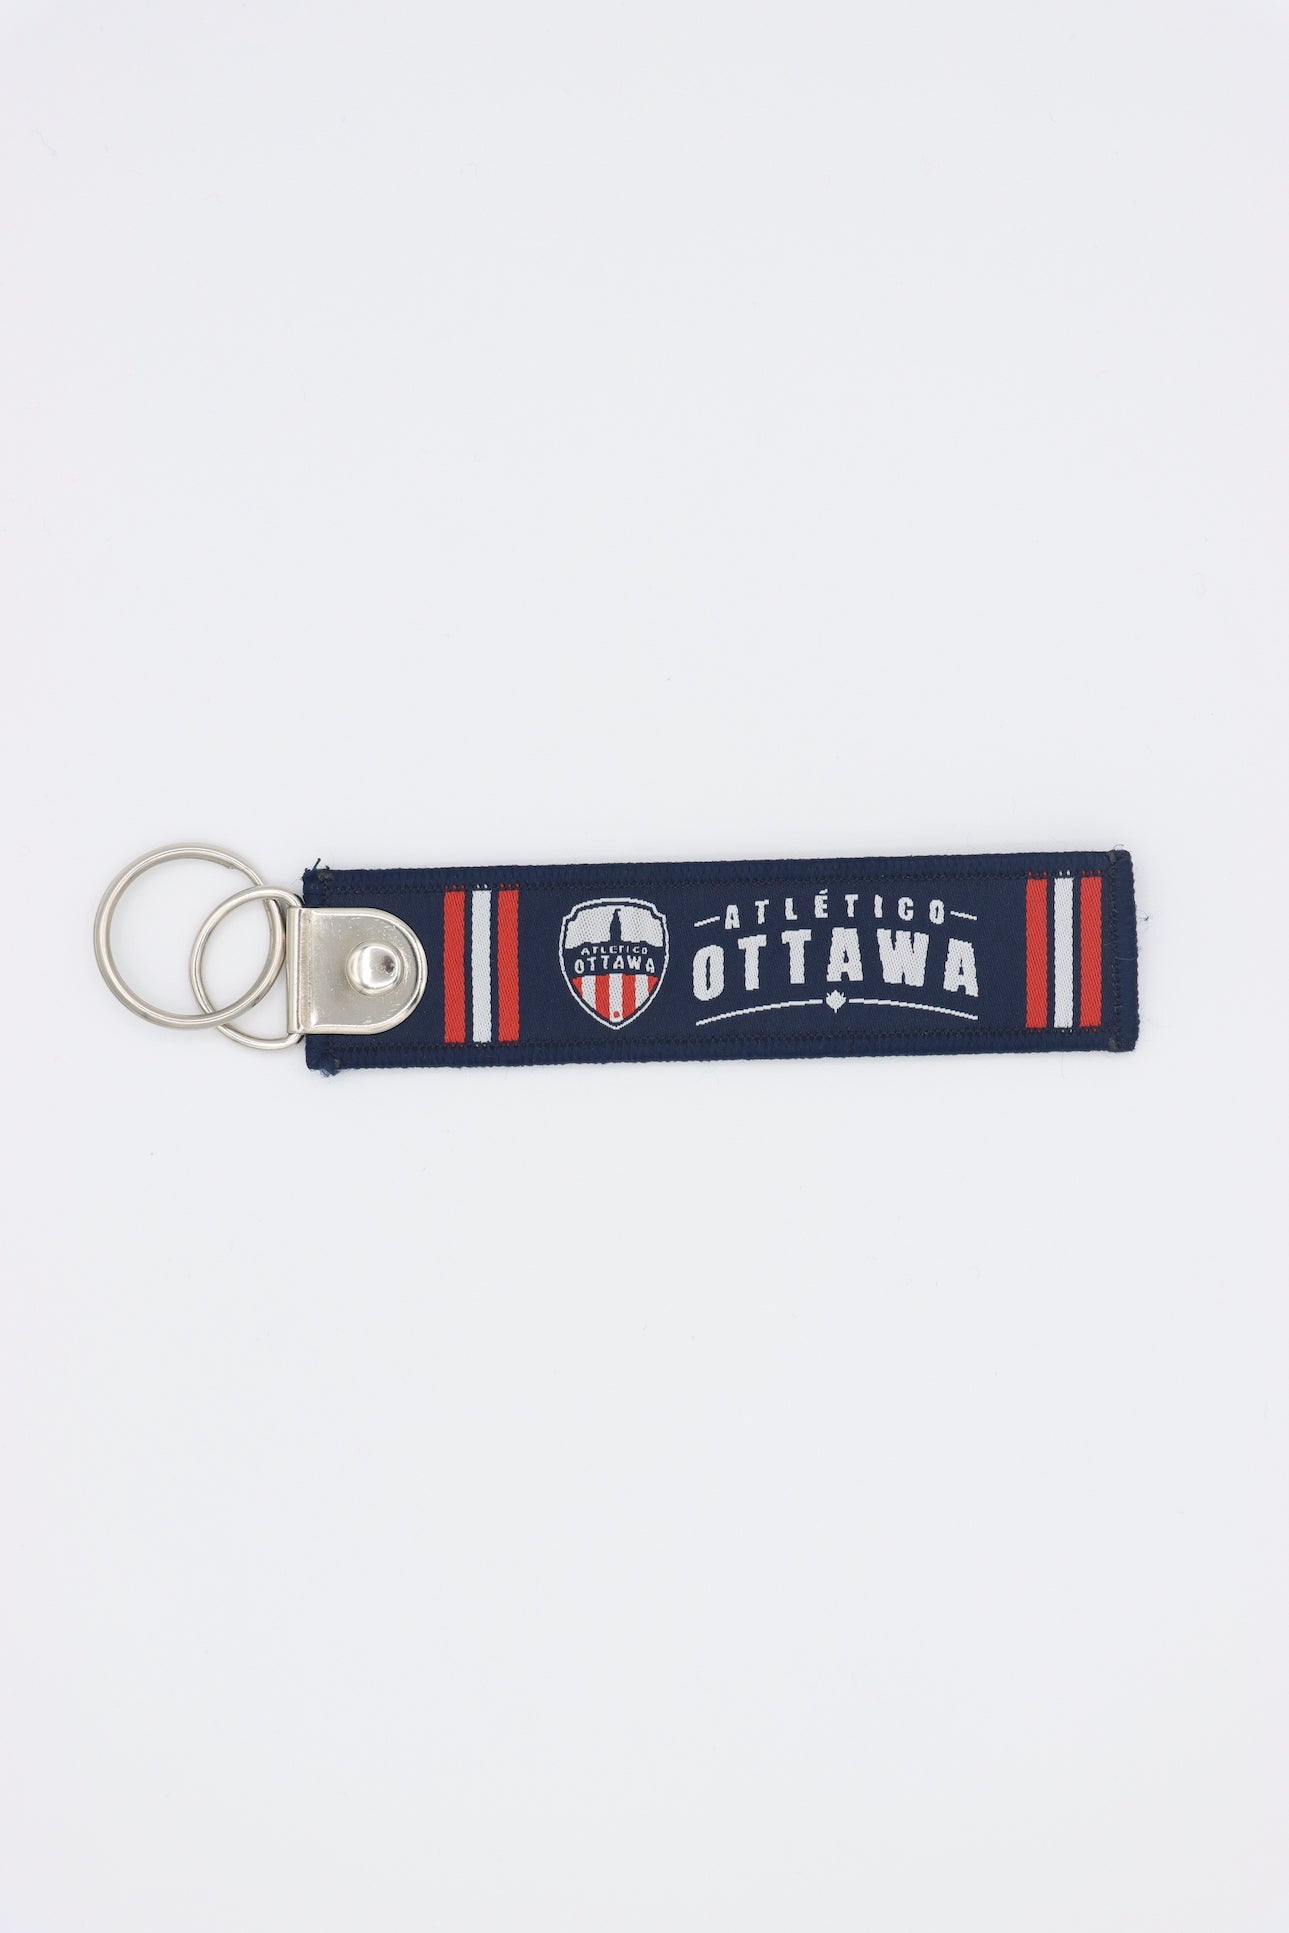 Atletico Ottawa Fabric Key Chain